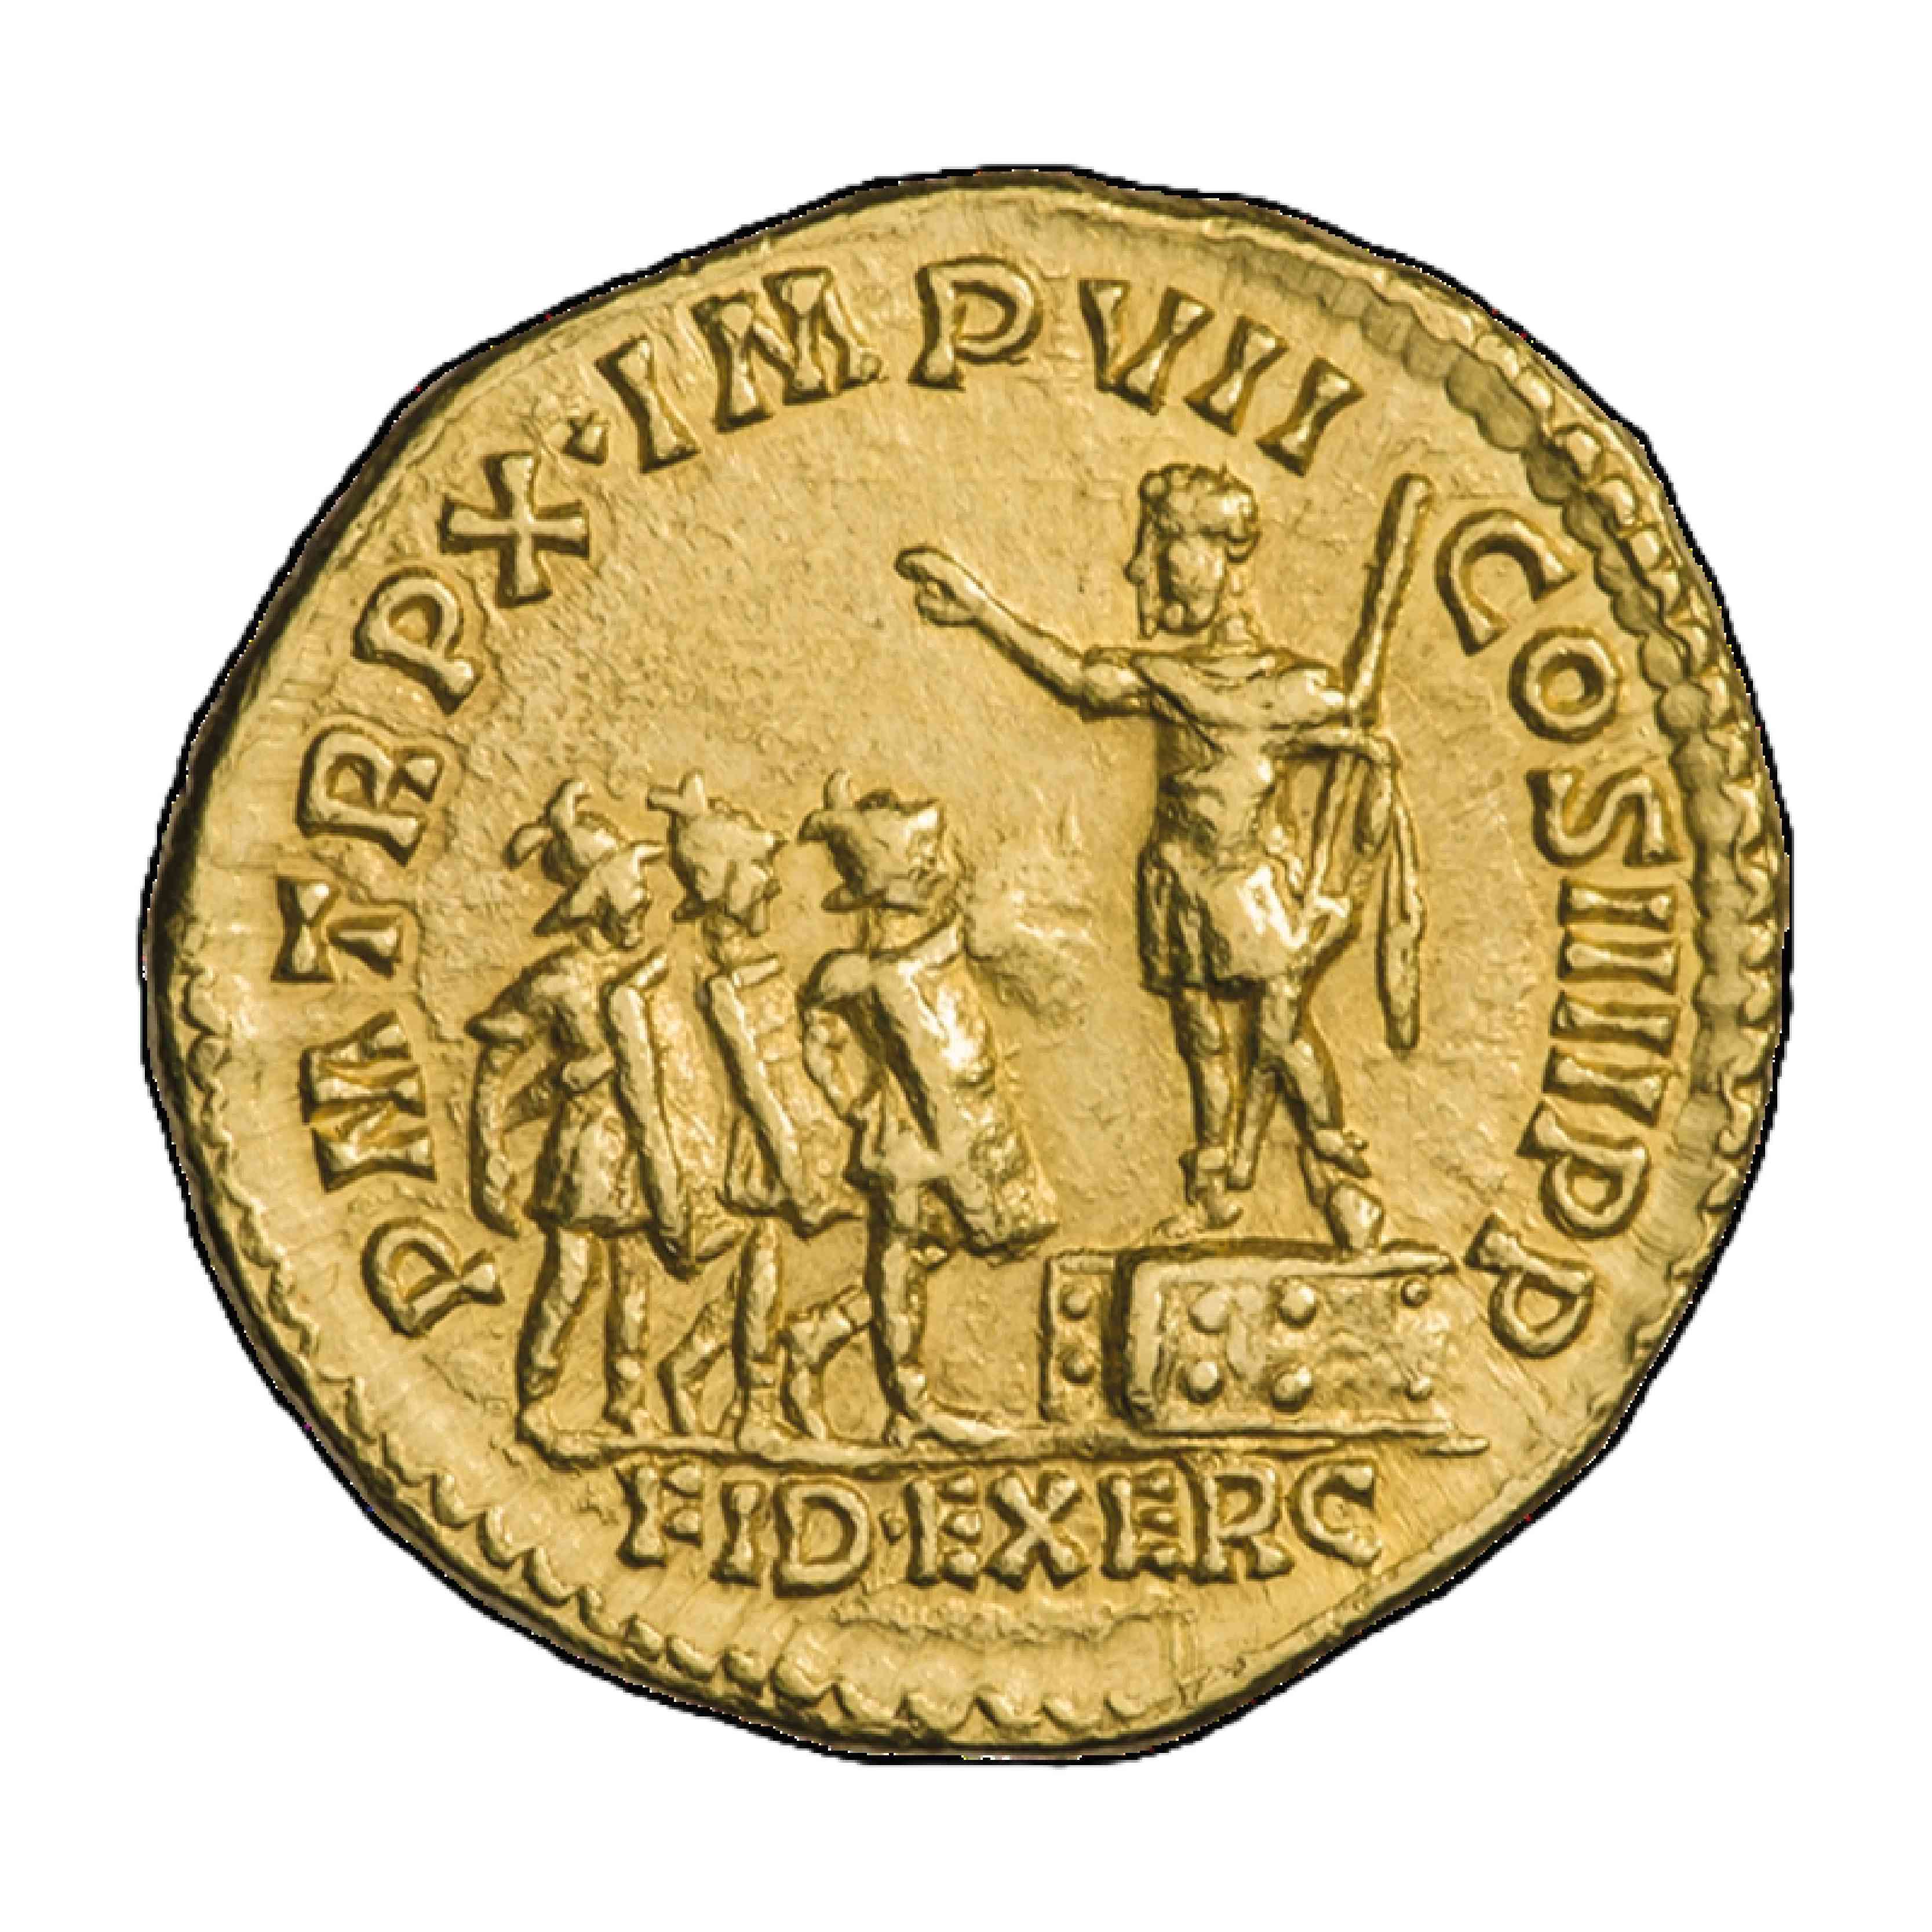 Monedas de Conmemorativas: Un Legado Milenario desde Roma